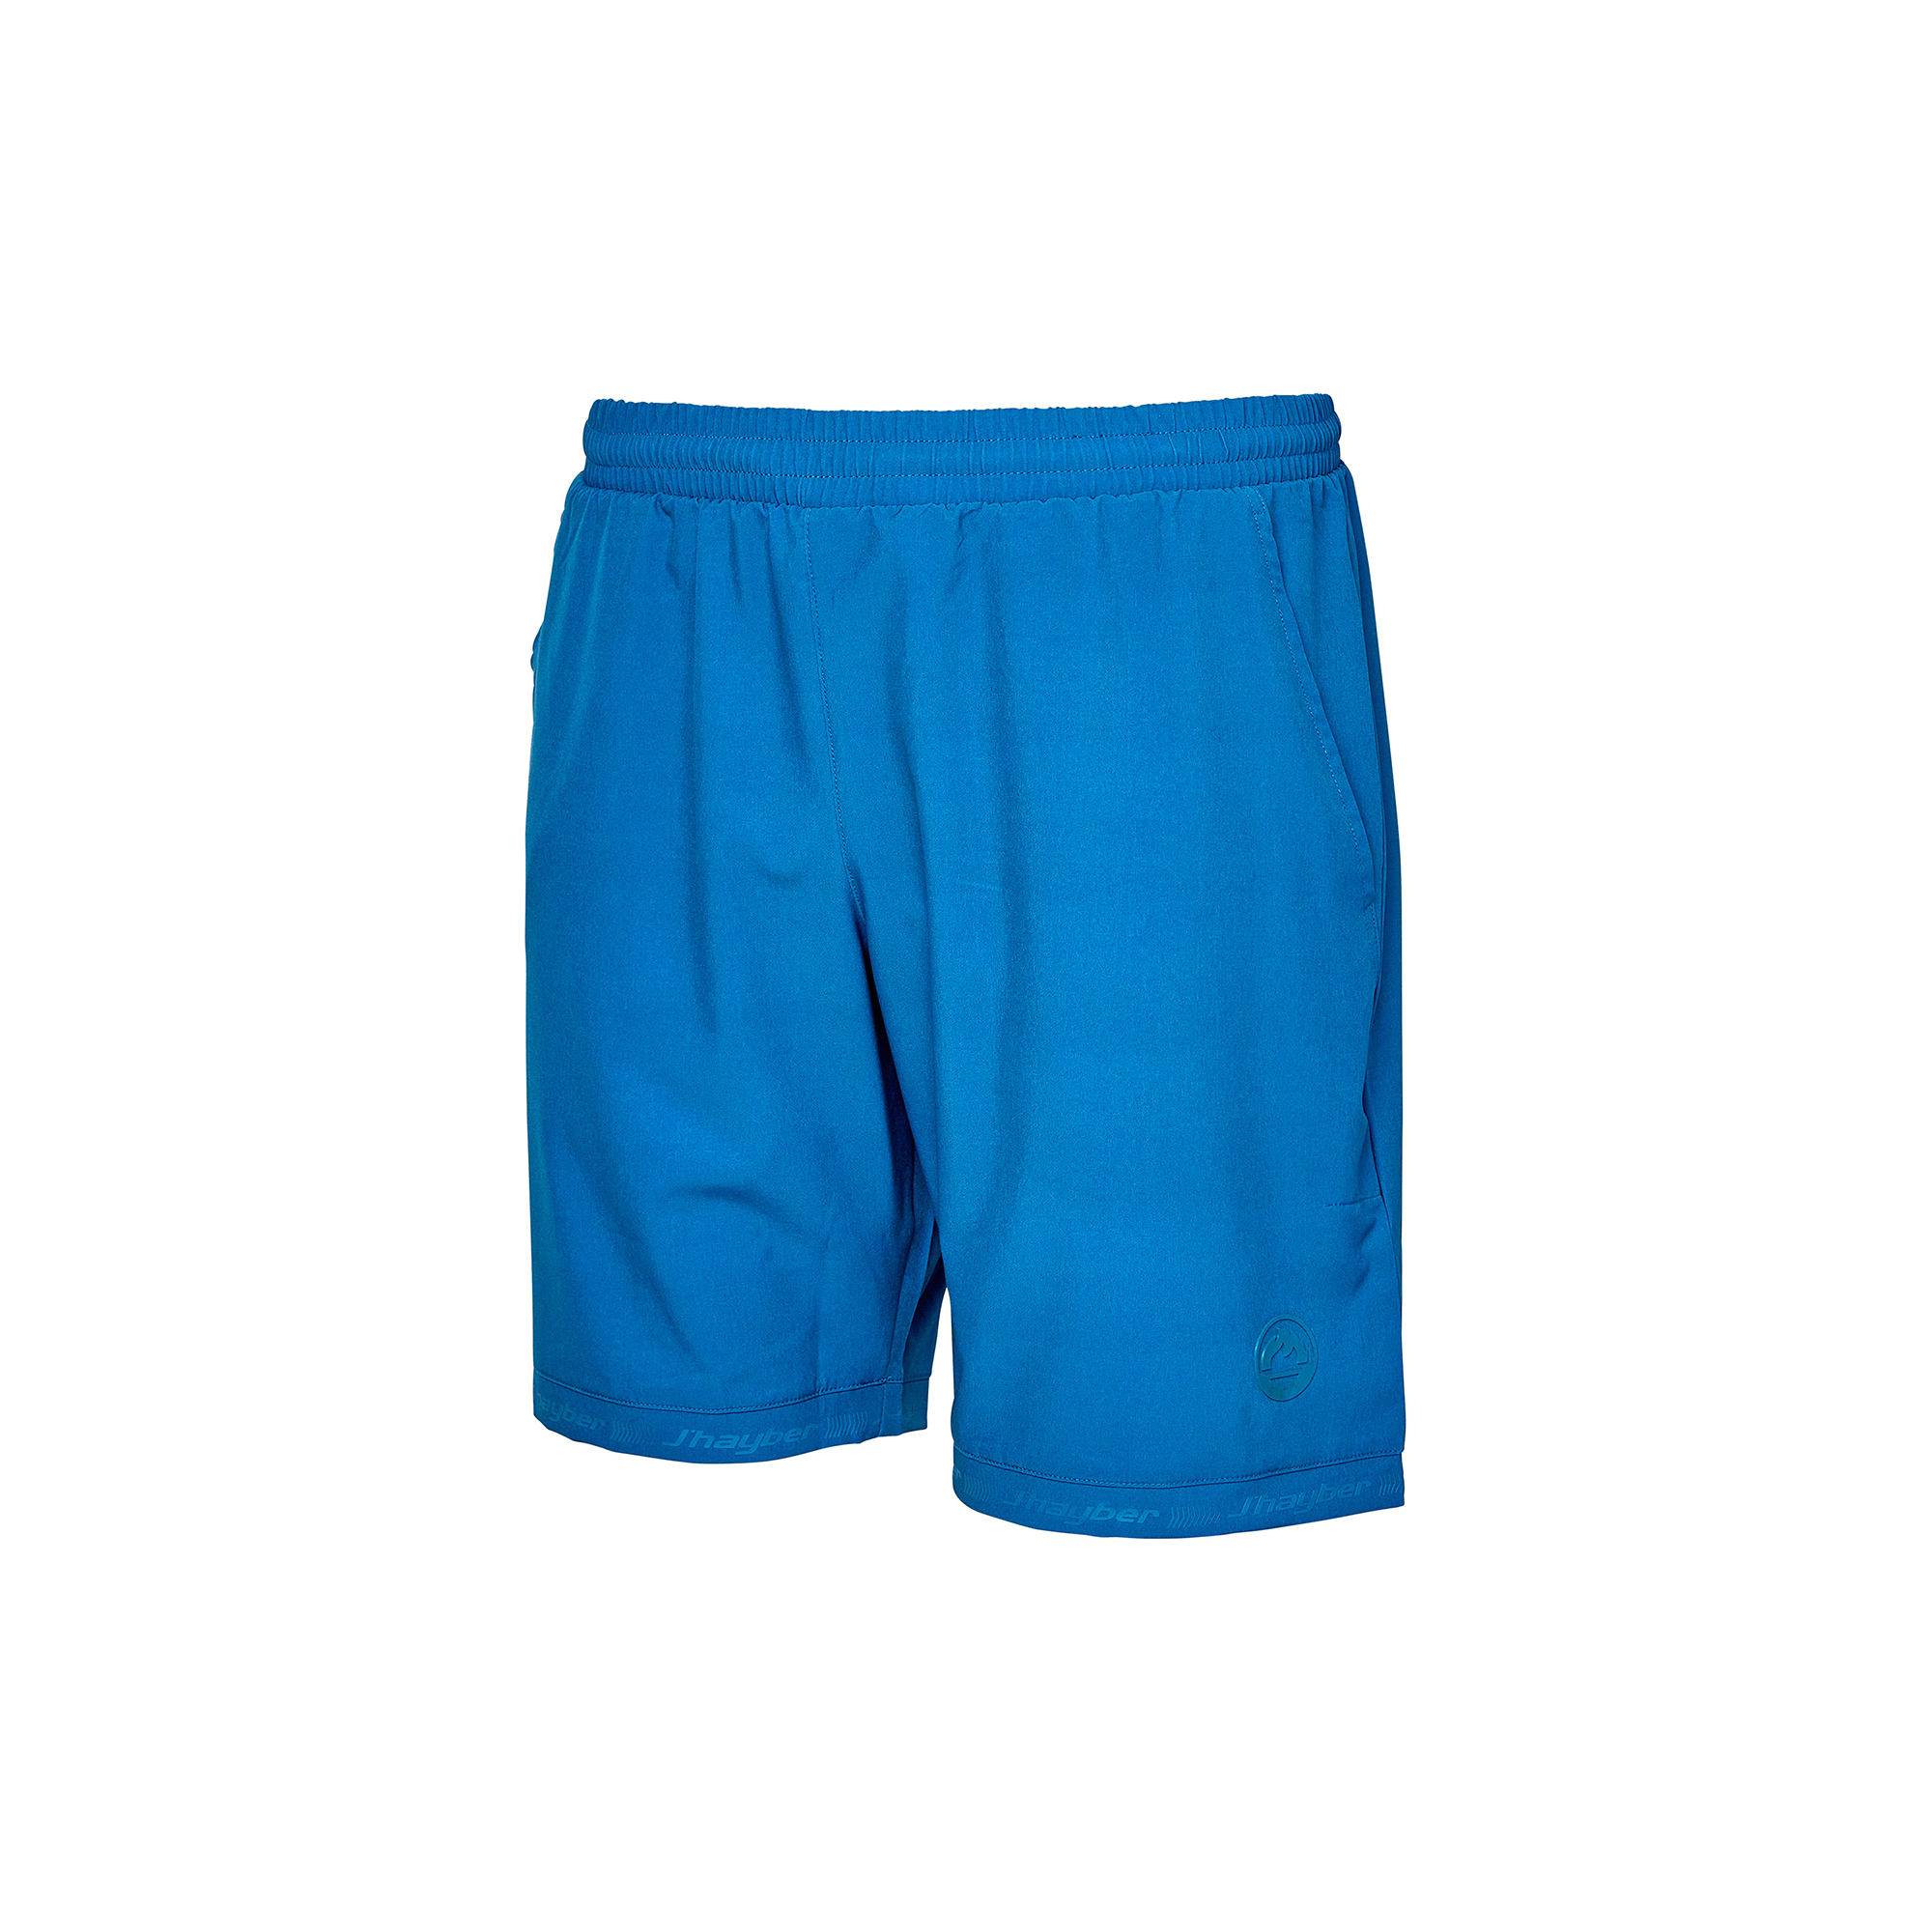 Calças Esportivas Masculinas Micro Azul - azul-marino - 